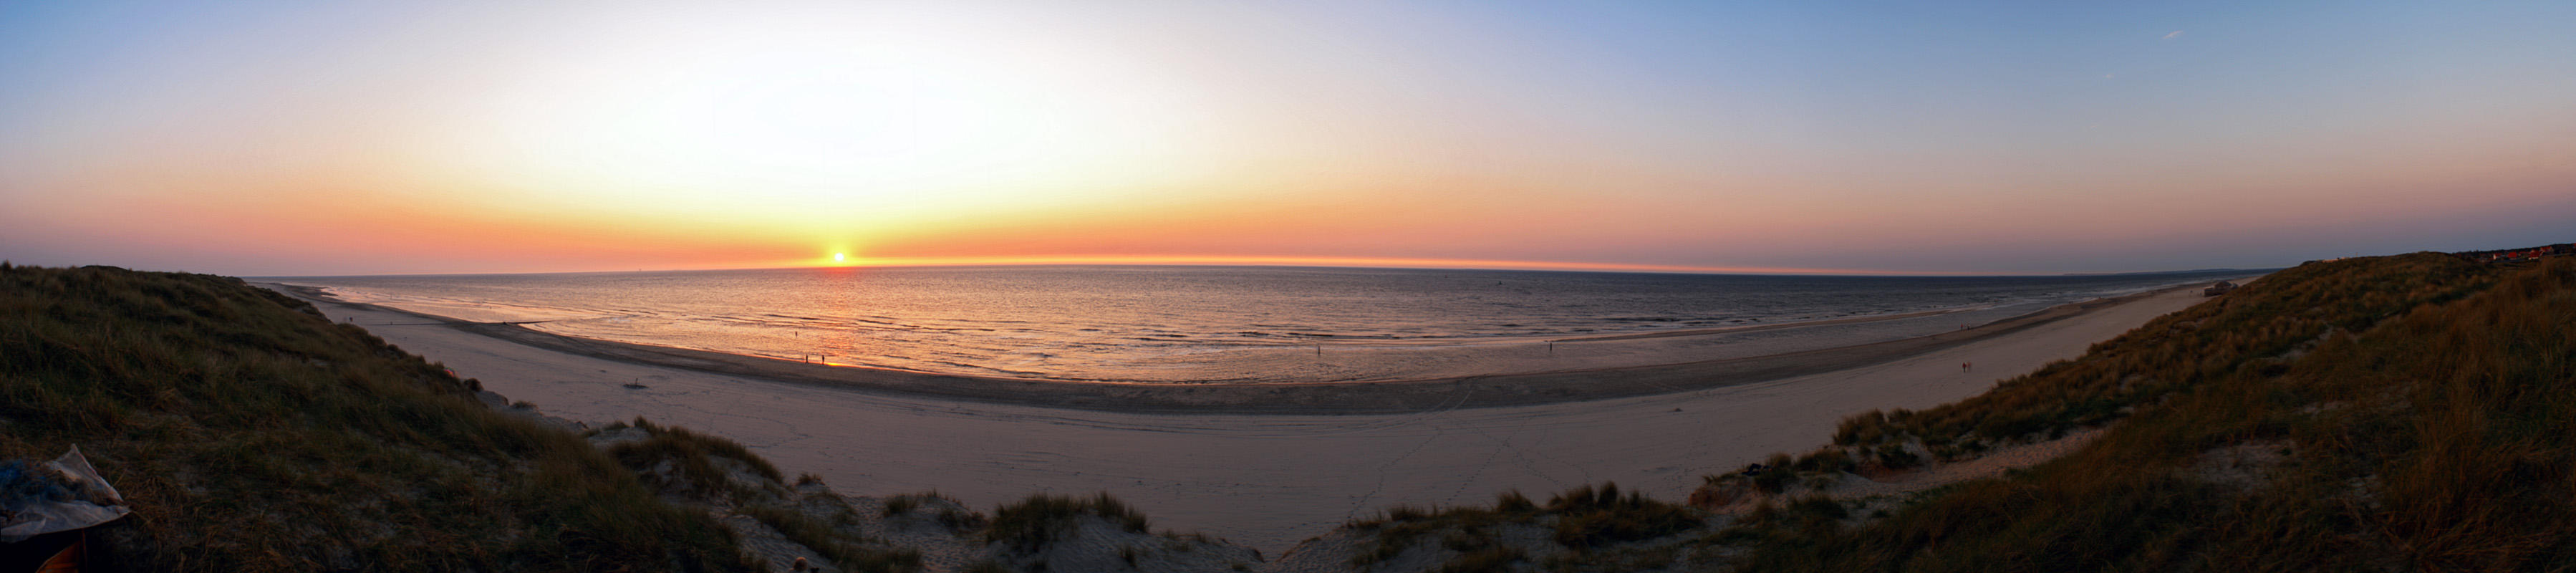 Northsea Beach Sunset 180